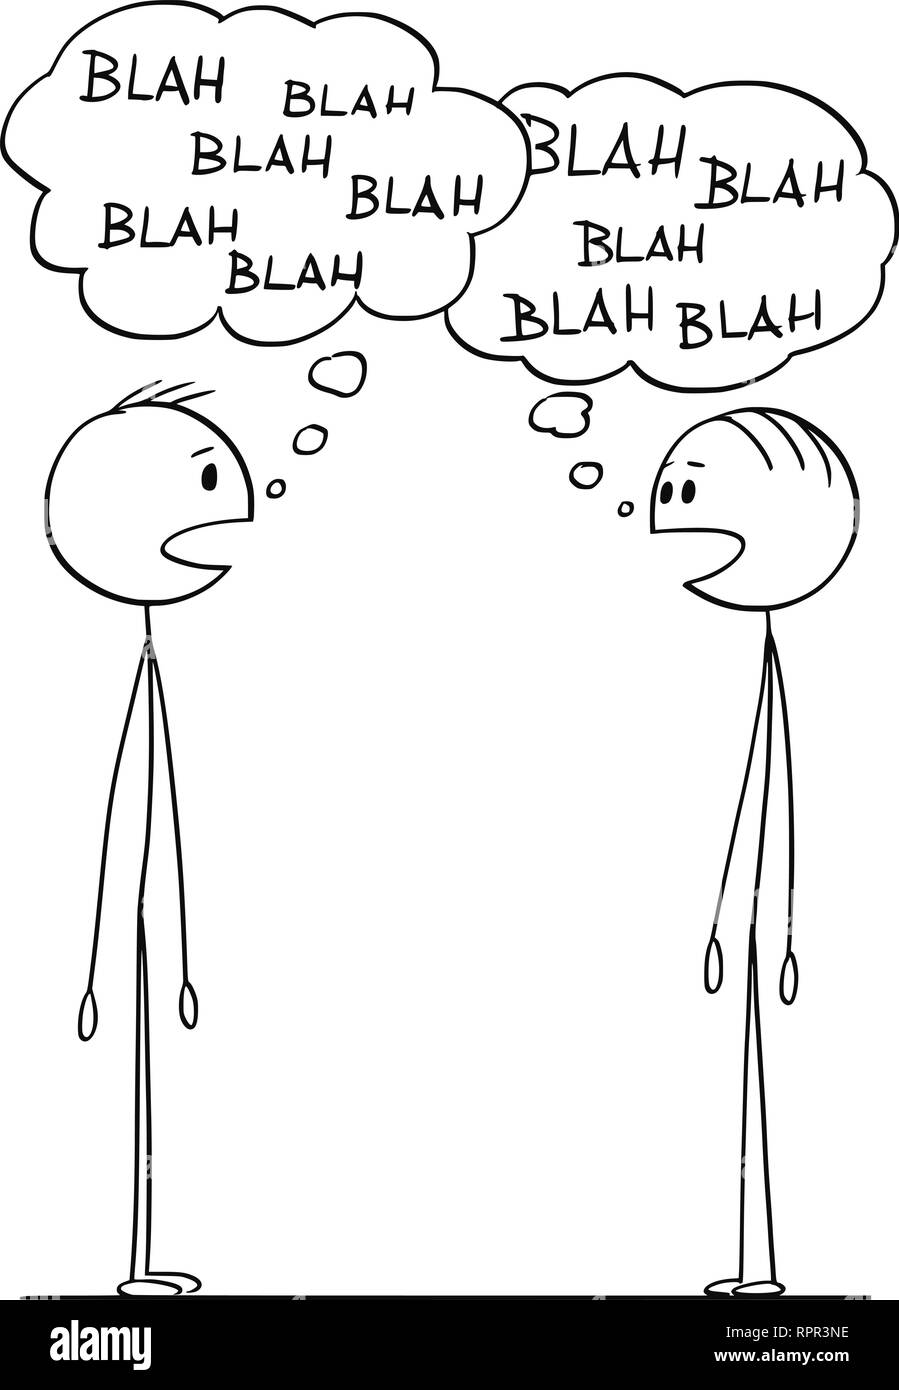 Cartoon of Two Men Conversation With Blah-Blah Speech Bubbles Stock Vector  Image & Art - Alamy